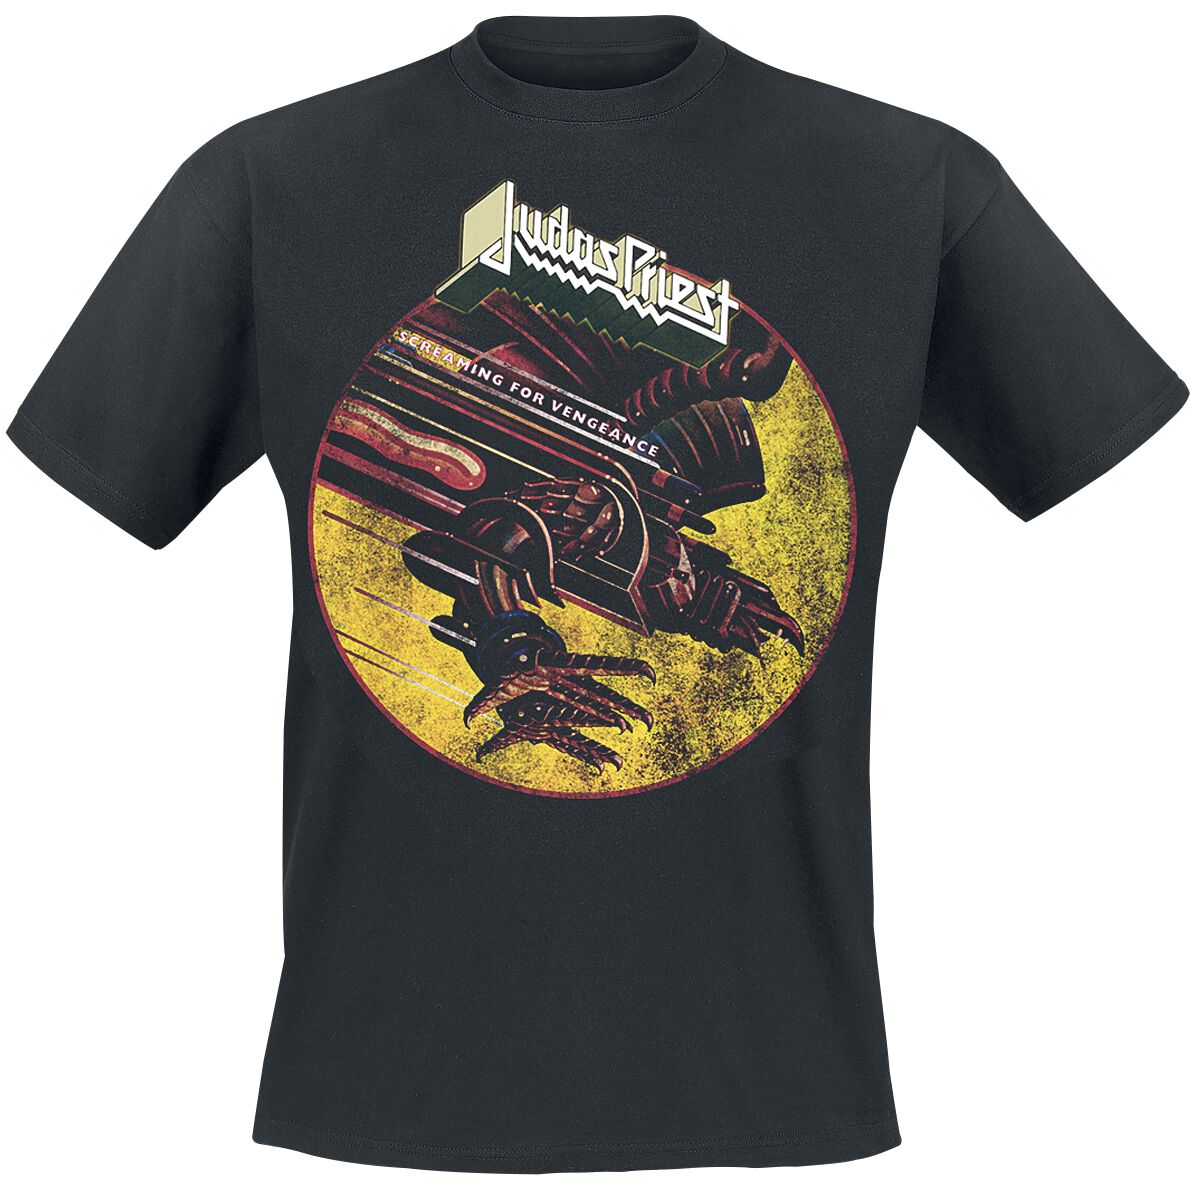 Judas Priest SFV Distressed T-Shirt schwarz in M